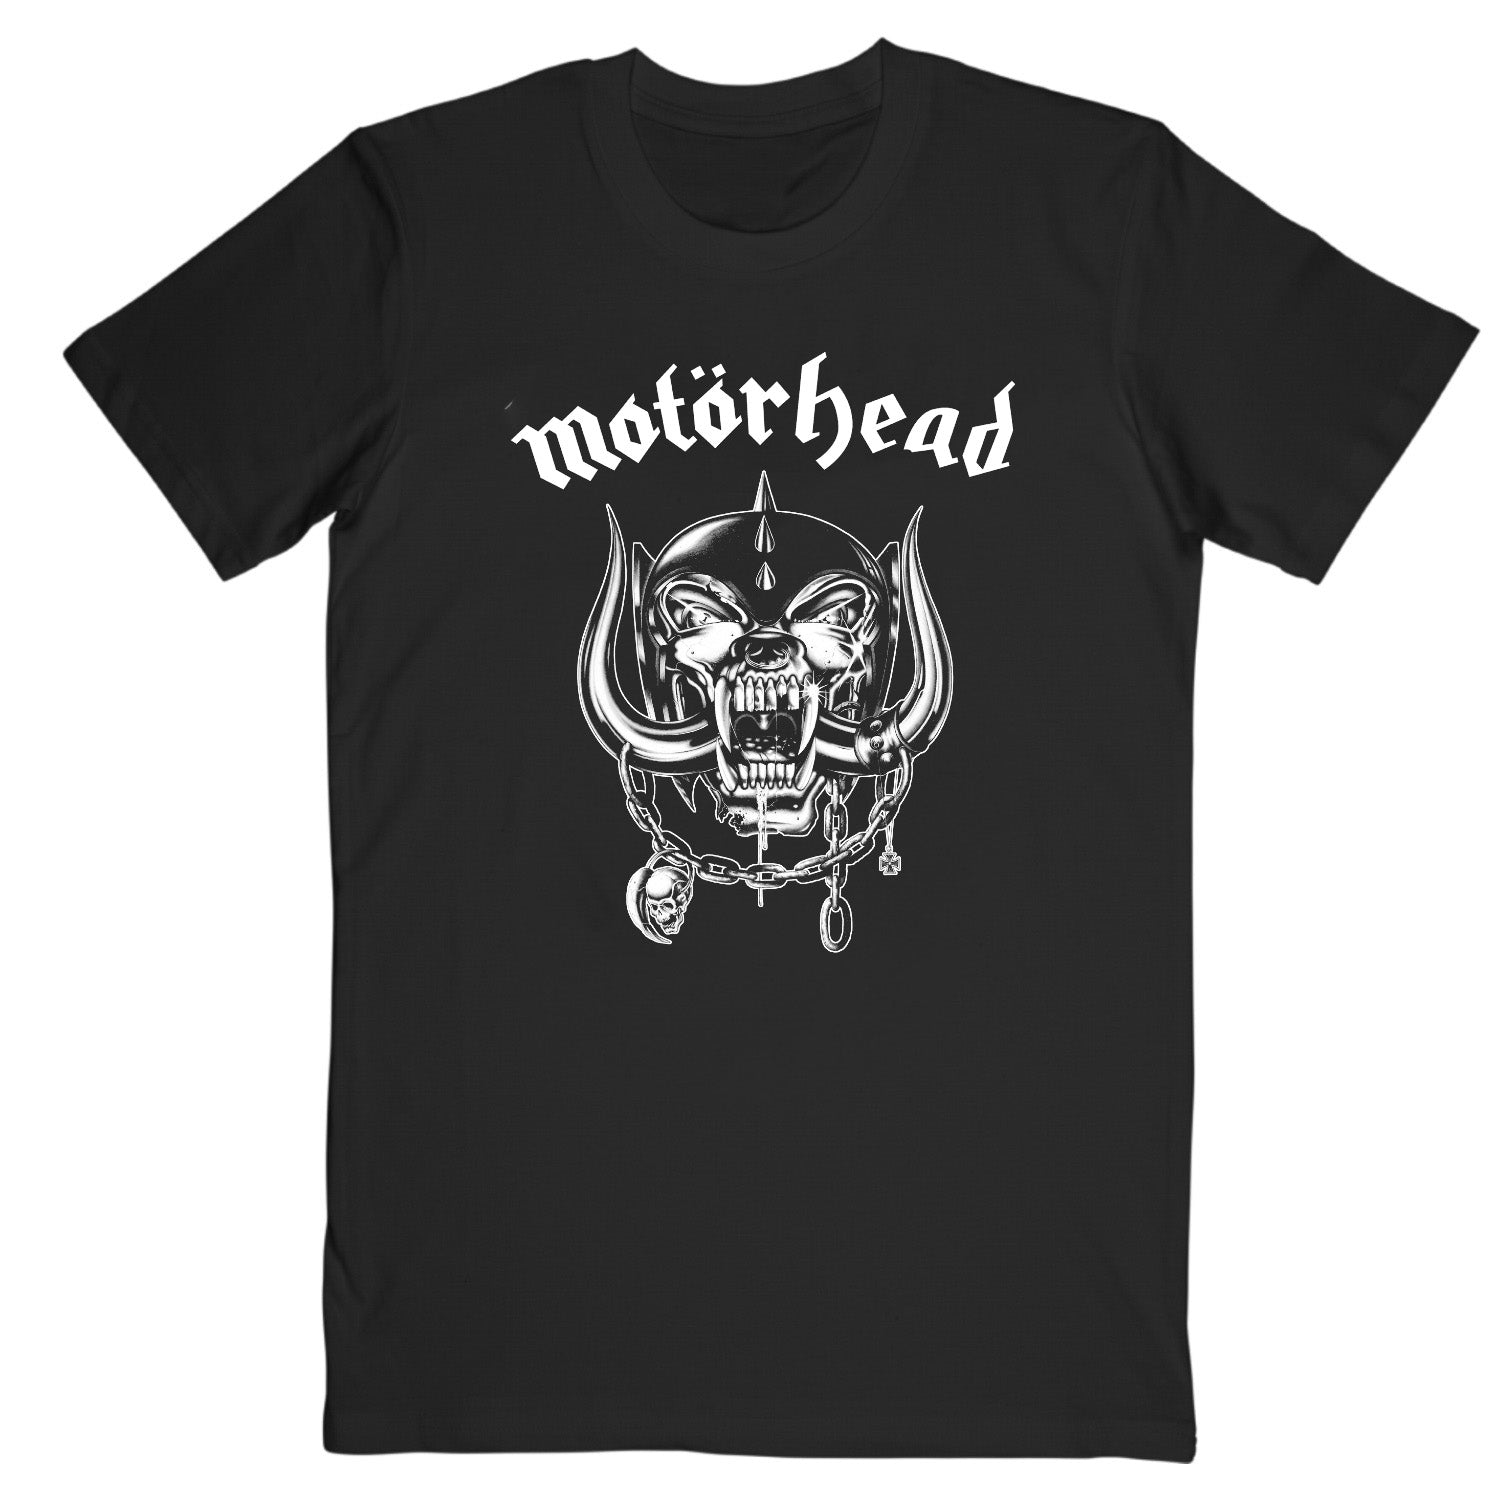 Motorhead - Make A Difference Tee